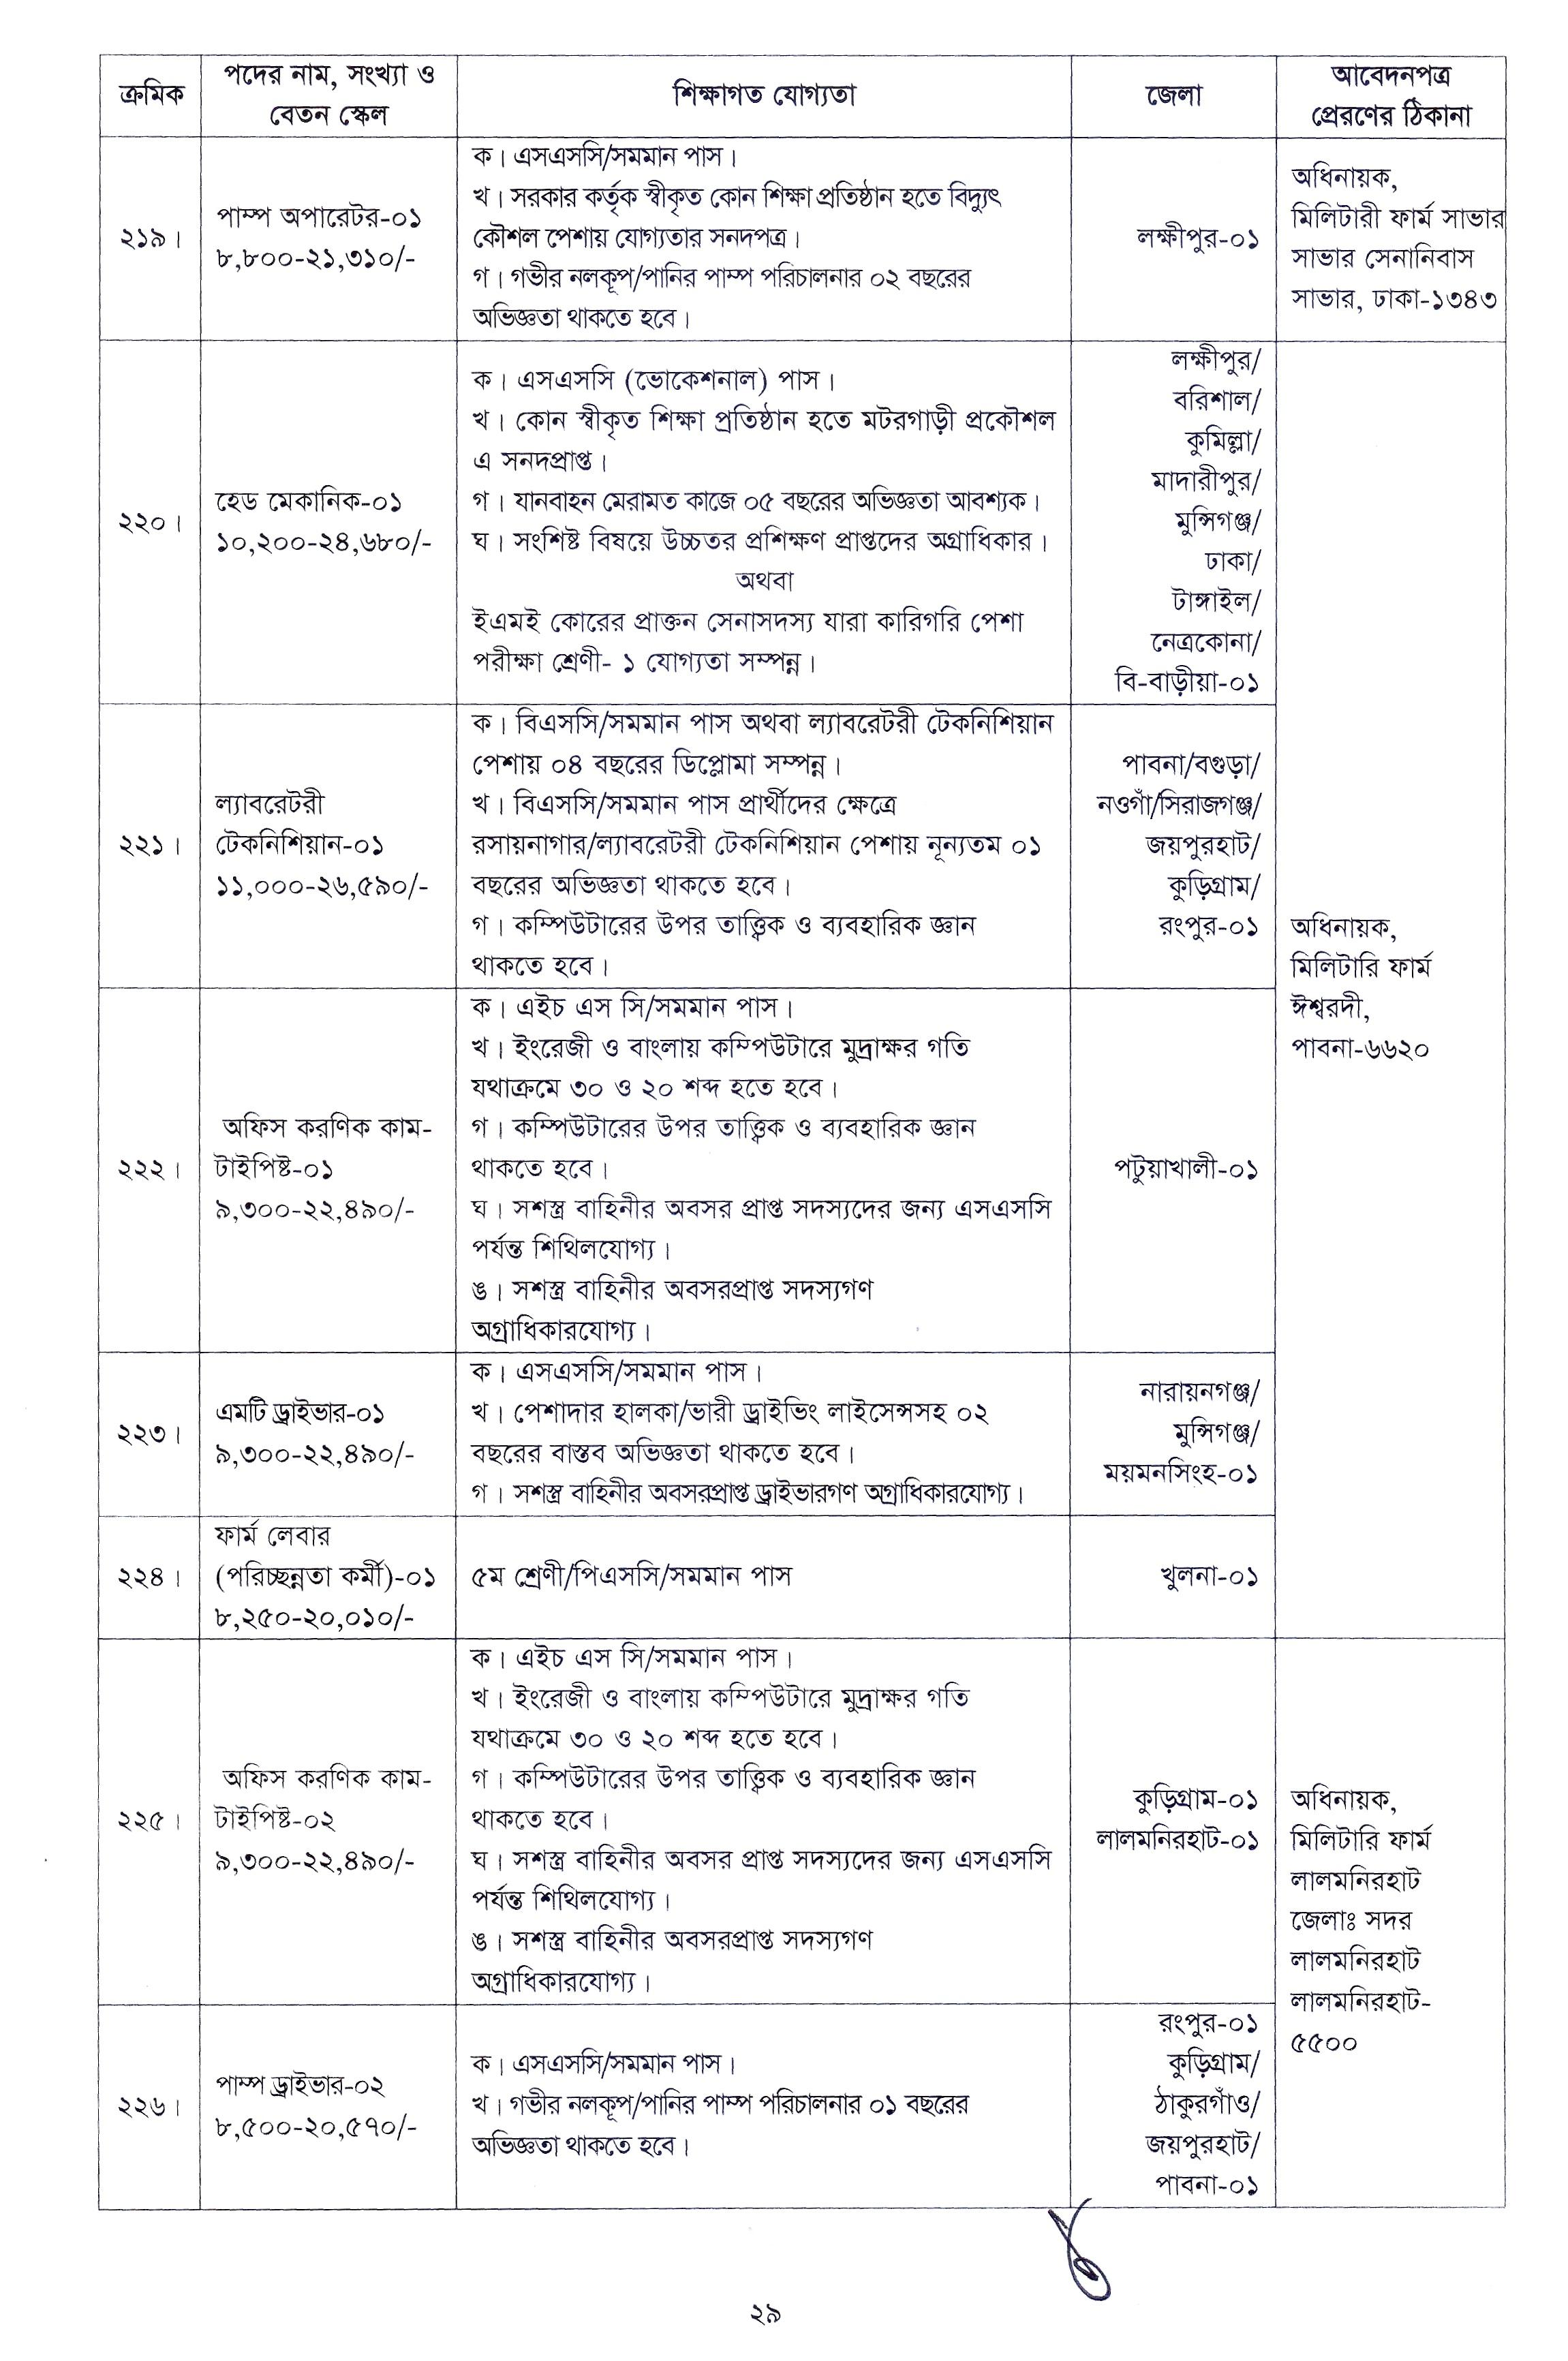 Bangladesh Army Civil Job Circular 2022